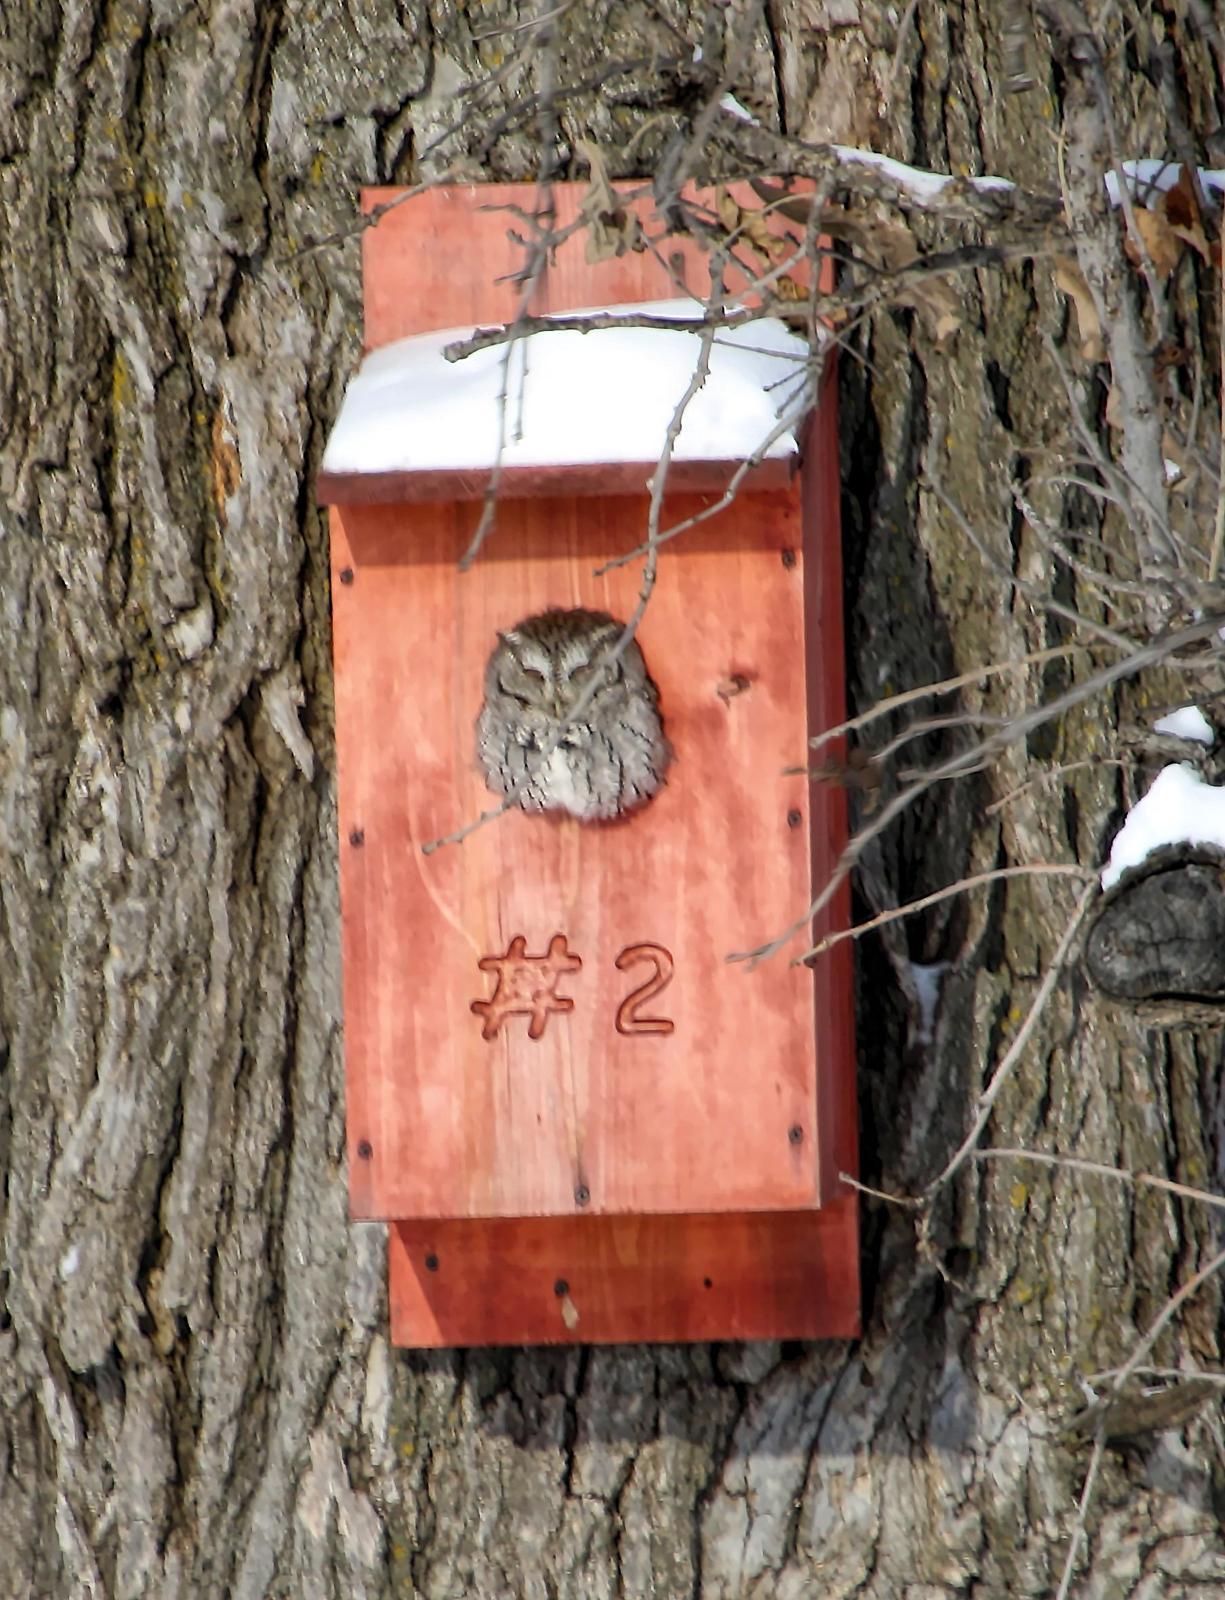 Eastern Screech-Owl Photo by Dan Tallman